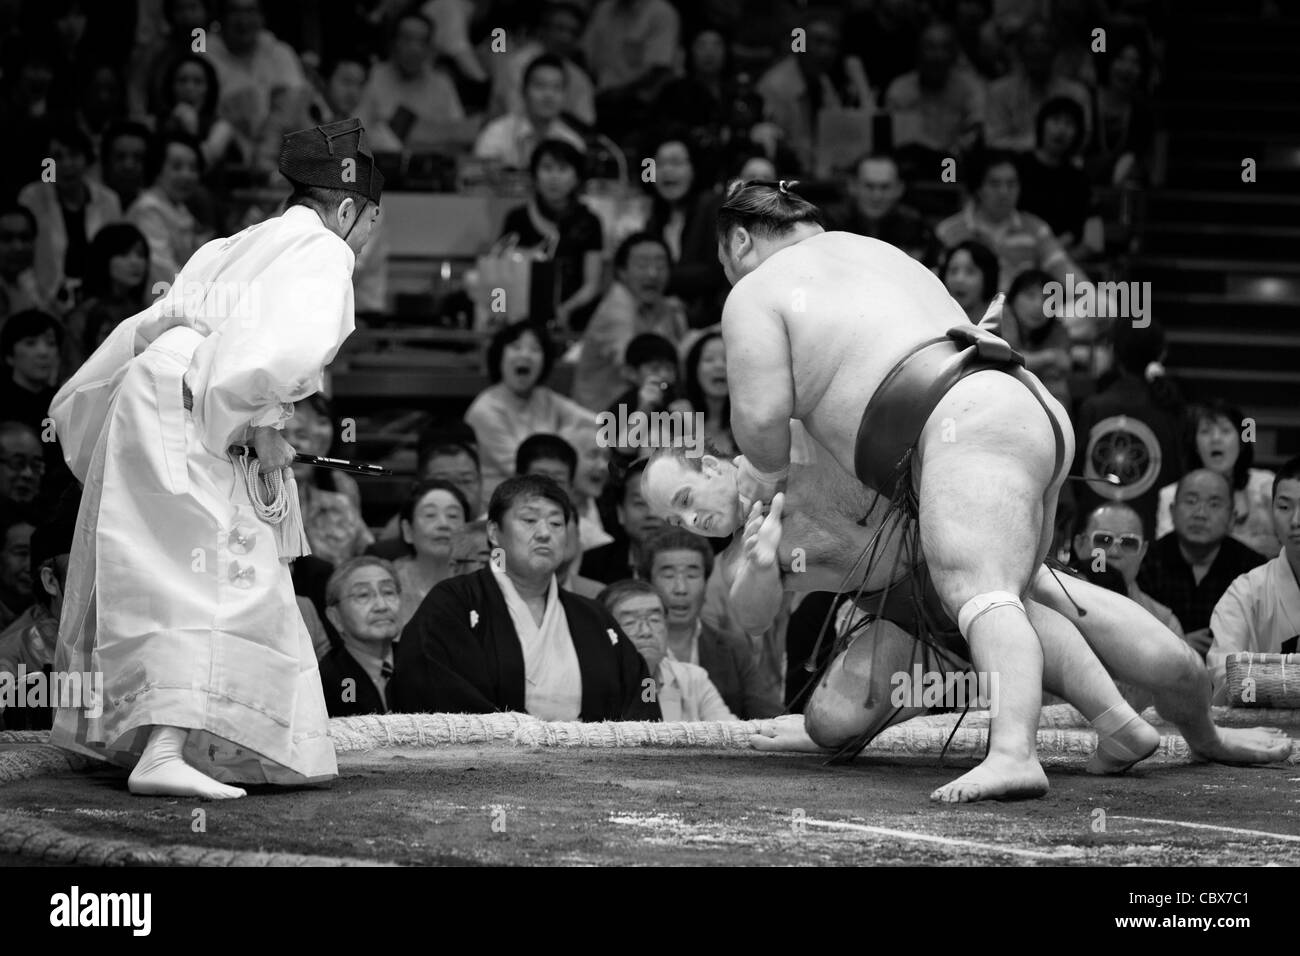 Tschechische Sumo-ringer takanoyama wird zu Boden - Ryogoku Kokugikan, Tokio, Japan Stockfoto